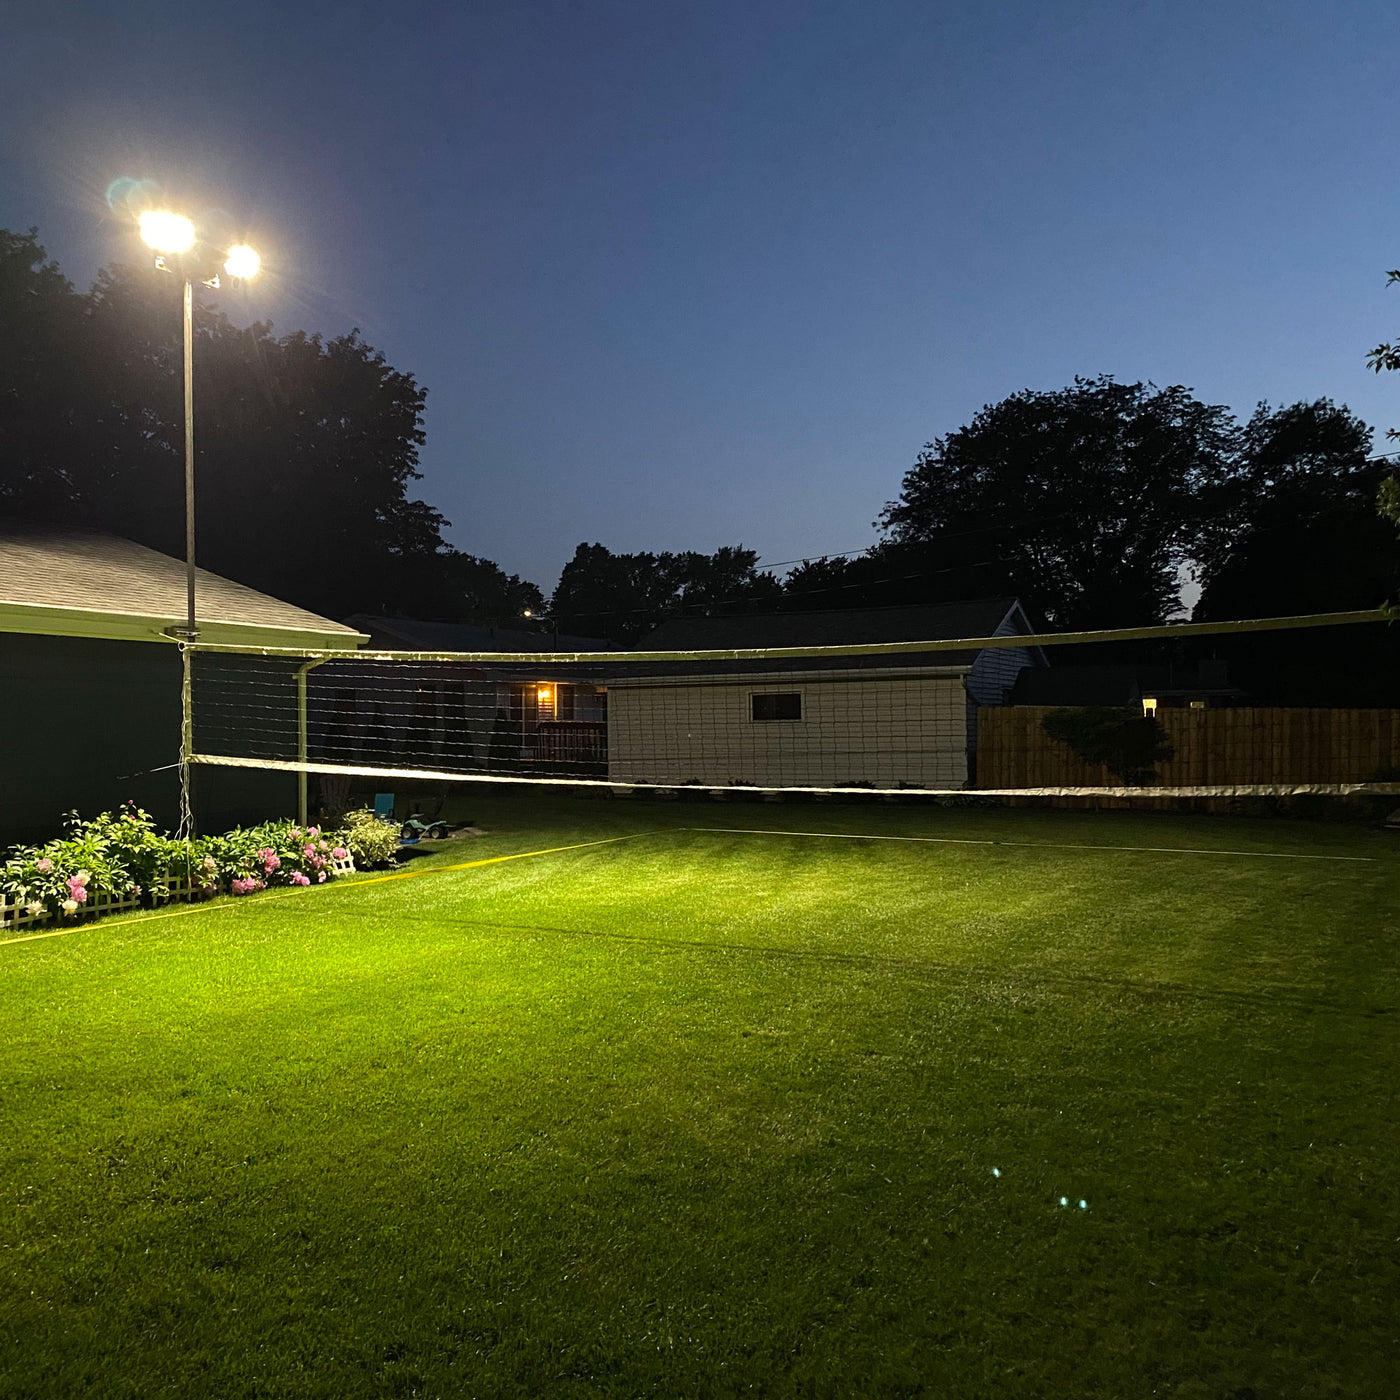 Backyard Volleyball Court Budget Lighting Project | Fond du Lac, Wisconsin